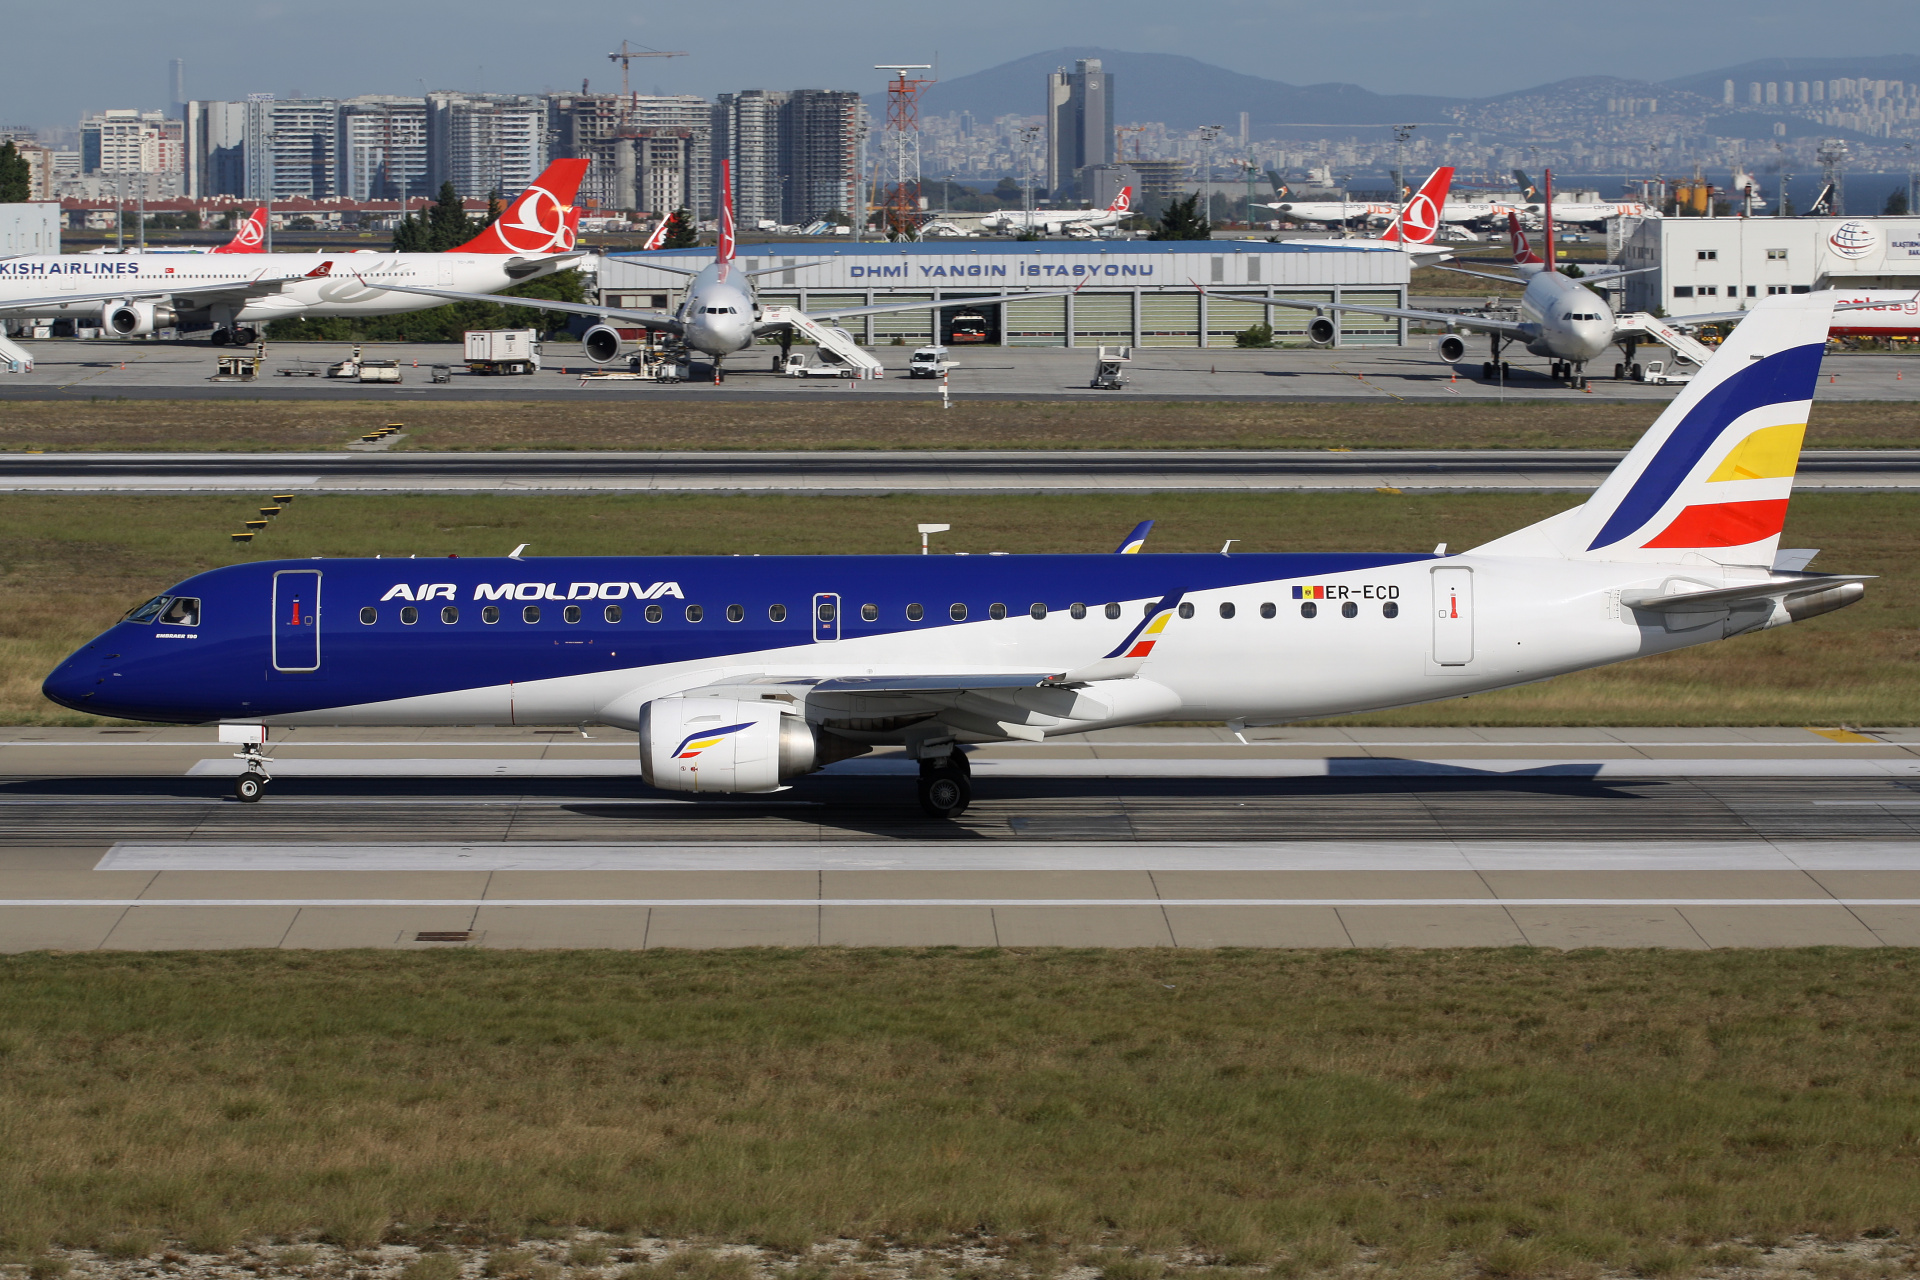 ER-ECD, Air Moldova (Samoloty » Port Lotniczy im. Atatürka w Stambule » Embraer ERJ-190)